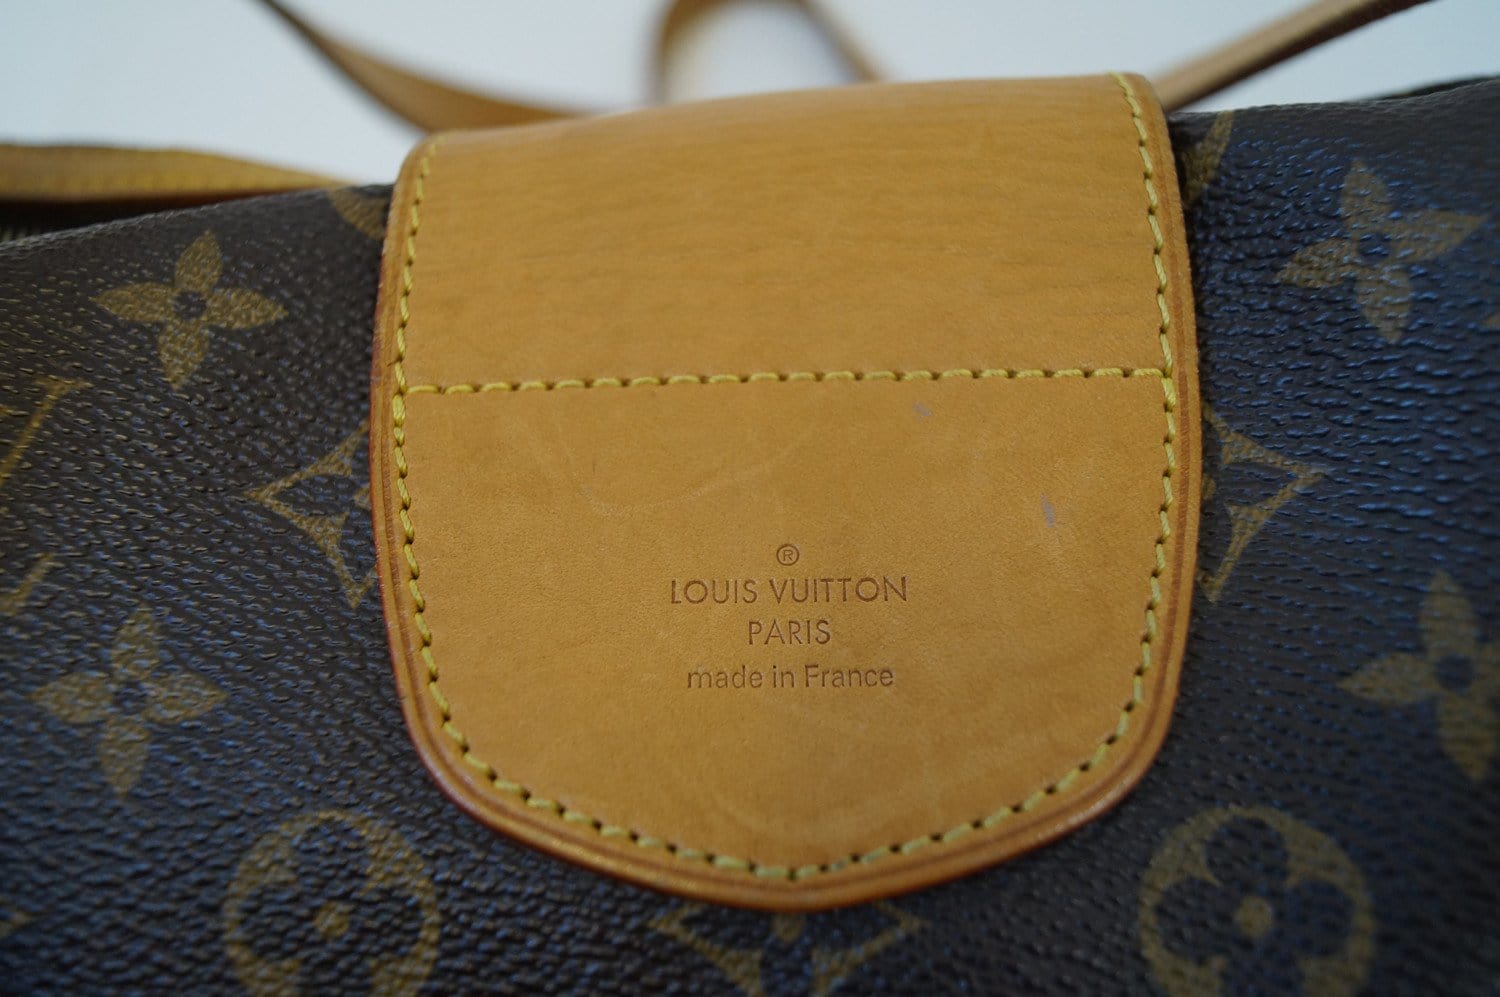 A Louis Vuitton Alma handbag. Made in France. Size PM. Features